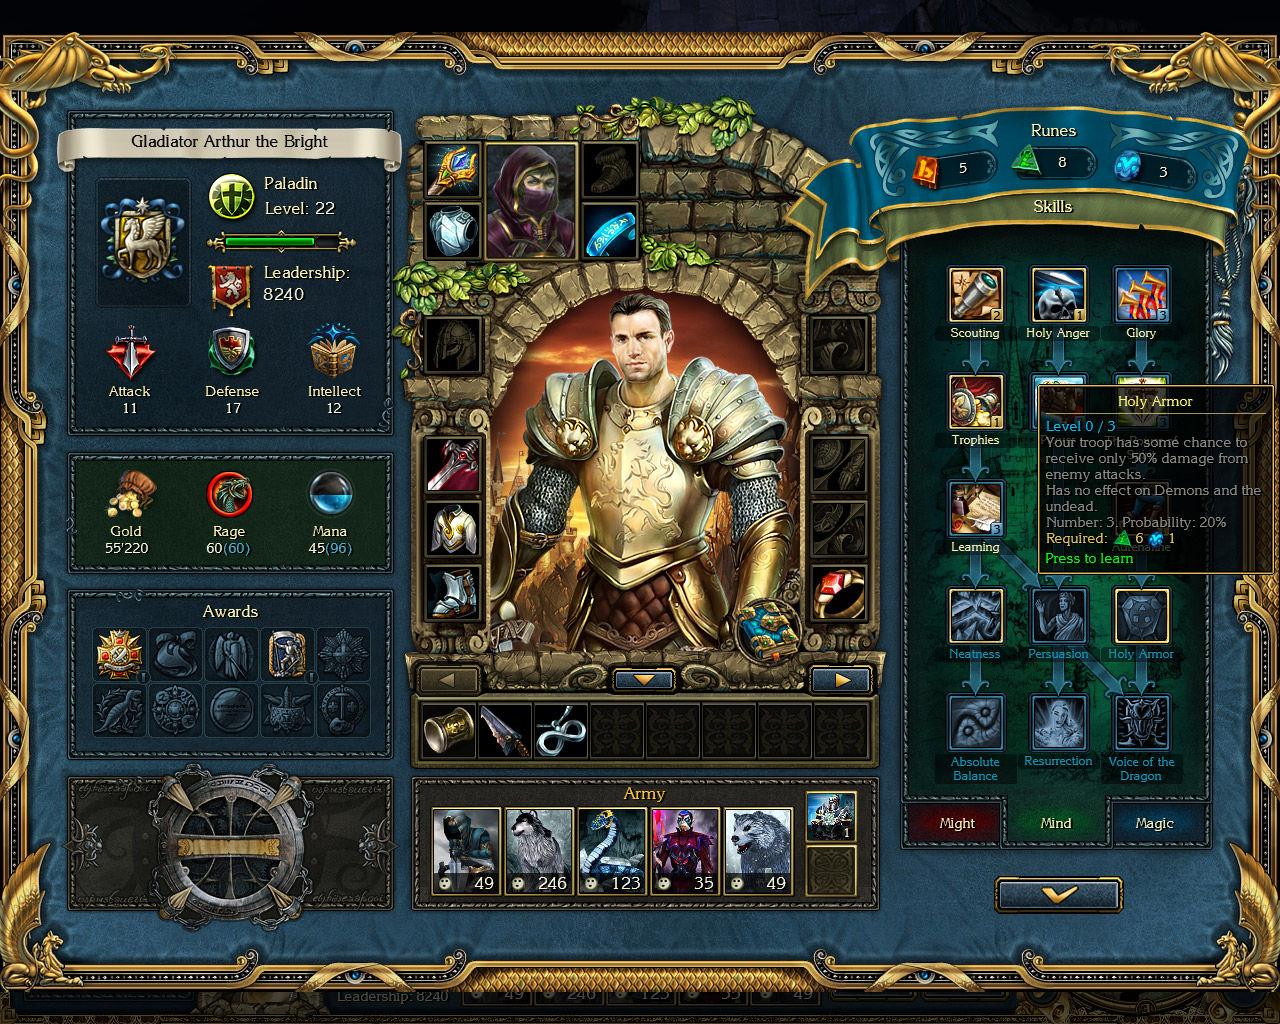 Screenshot №8 from game King's Bounty: Crossworlds